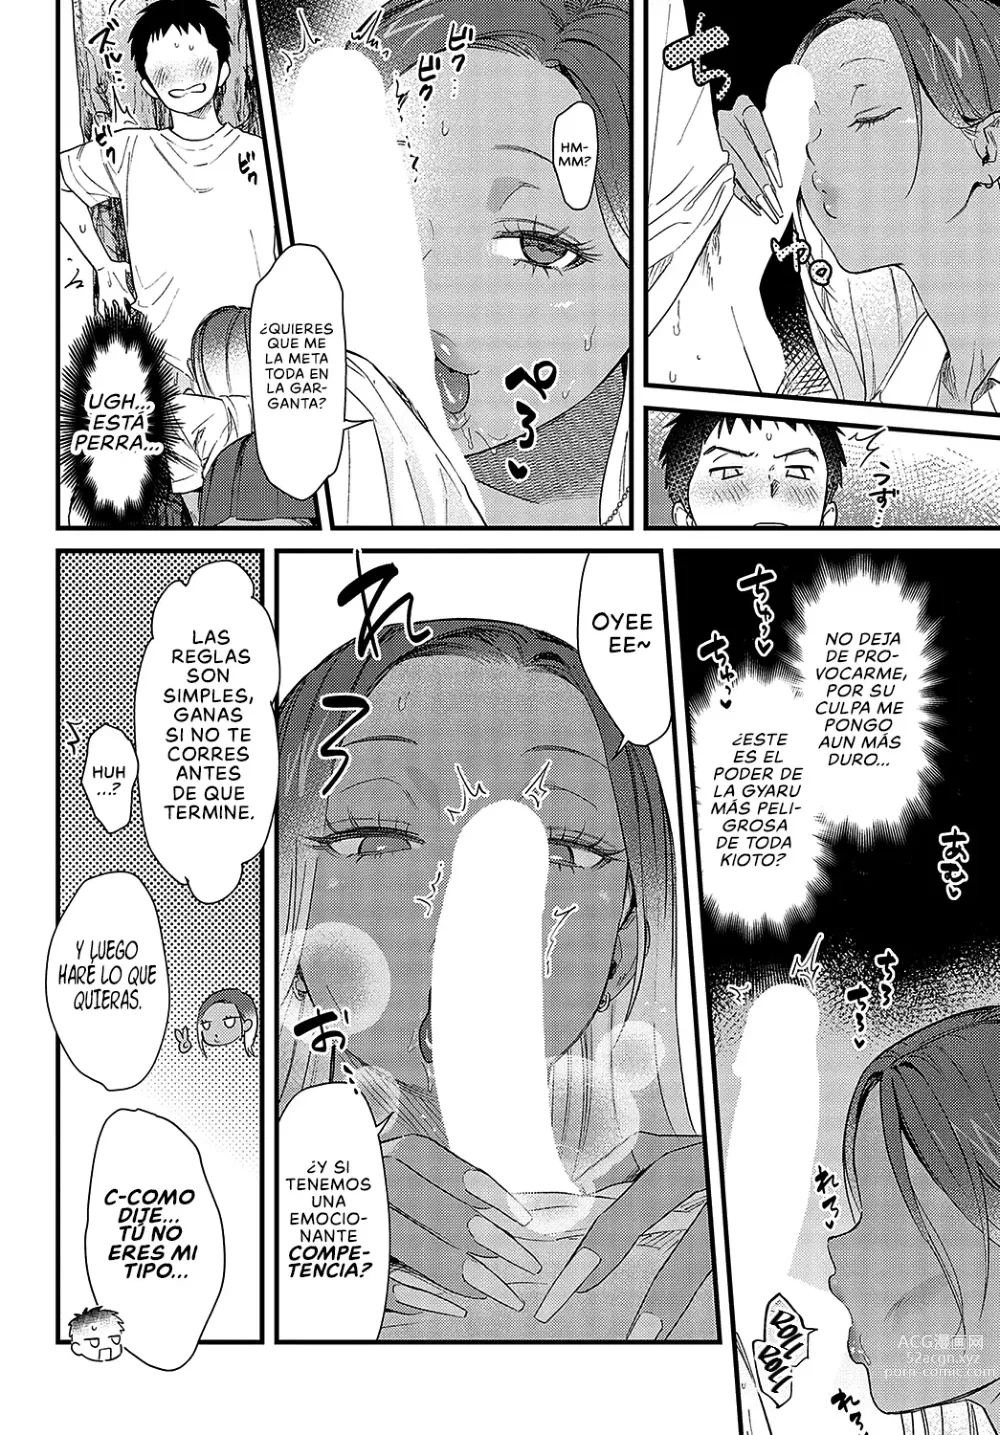 Page 12 of manga Me voy a Kioto!